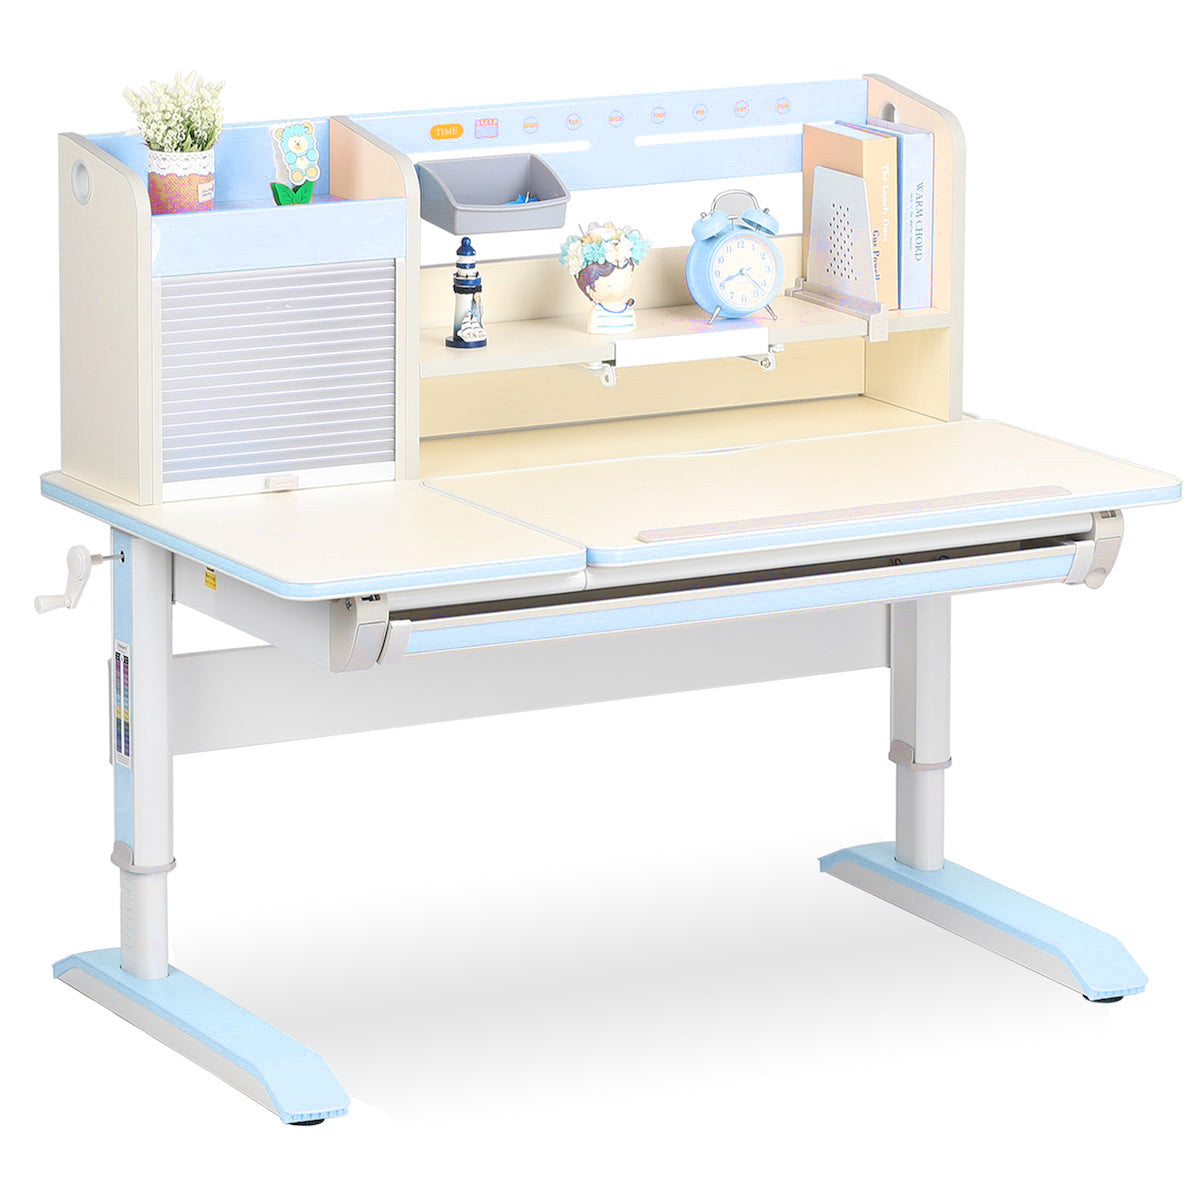 IMPACT Ergo-Growing Kids Study Desk 1200mm x 700mm, IM-D12L1200V2